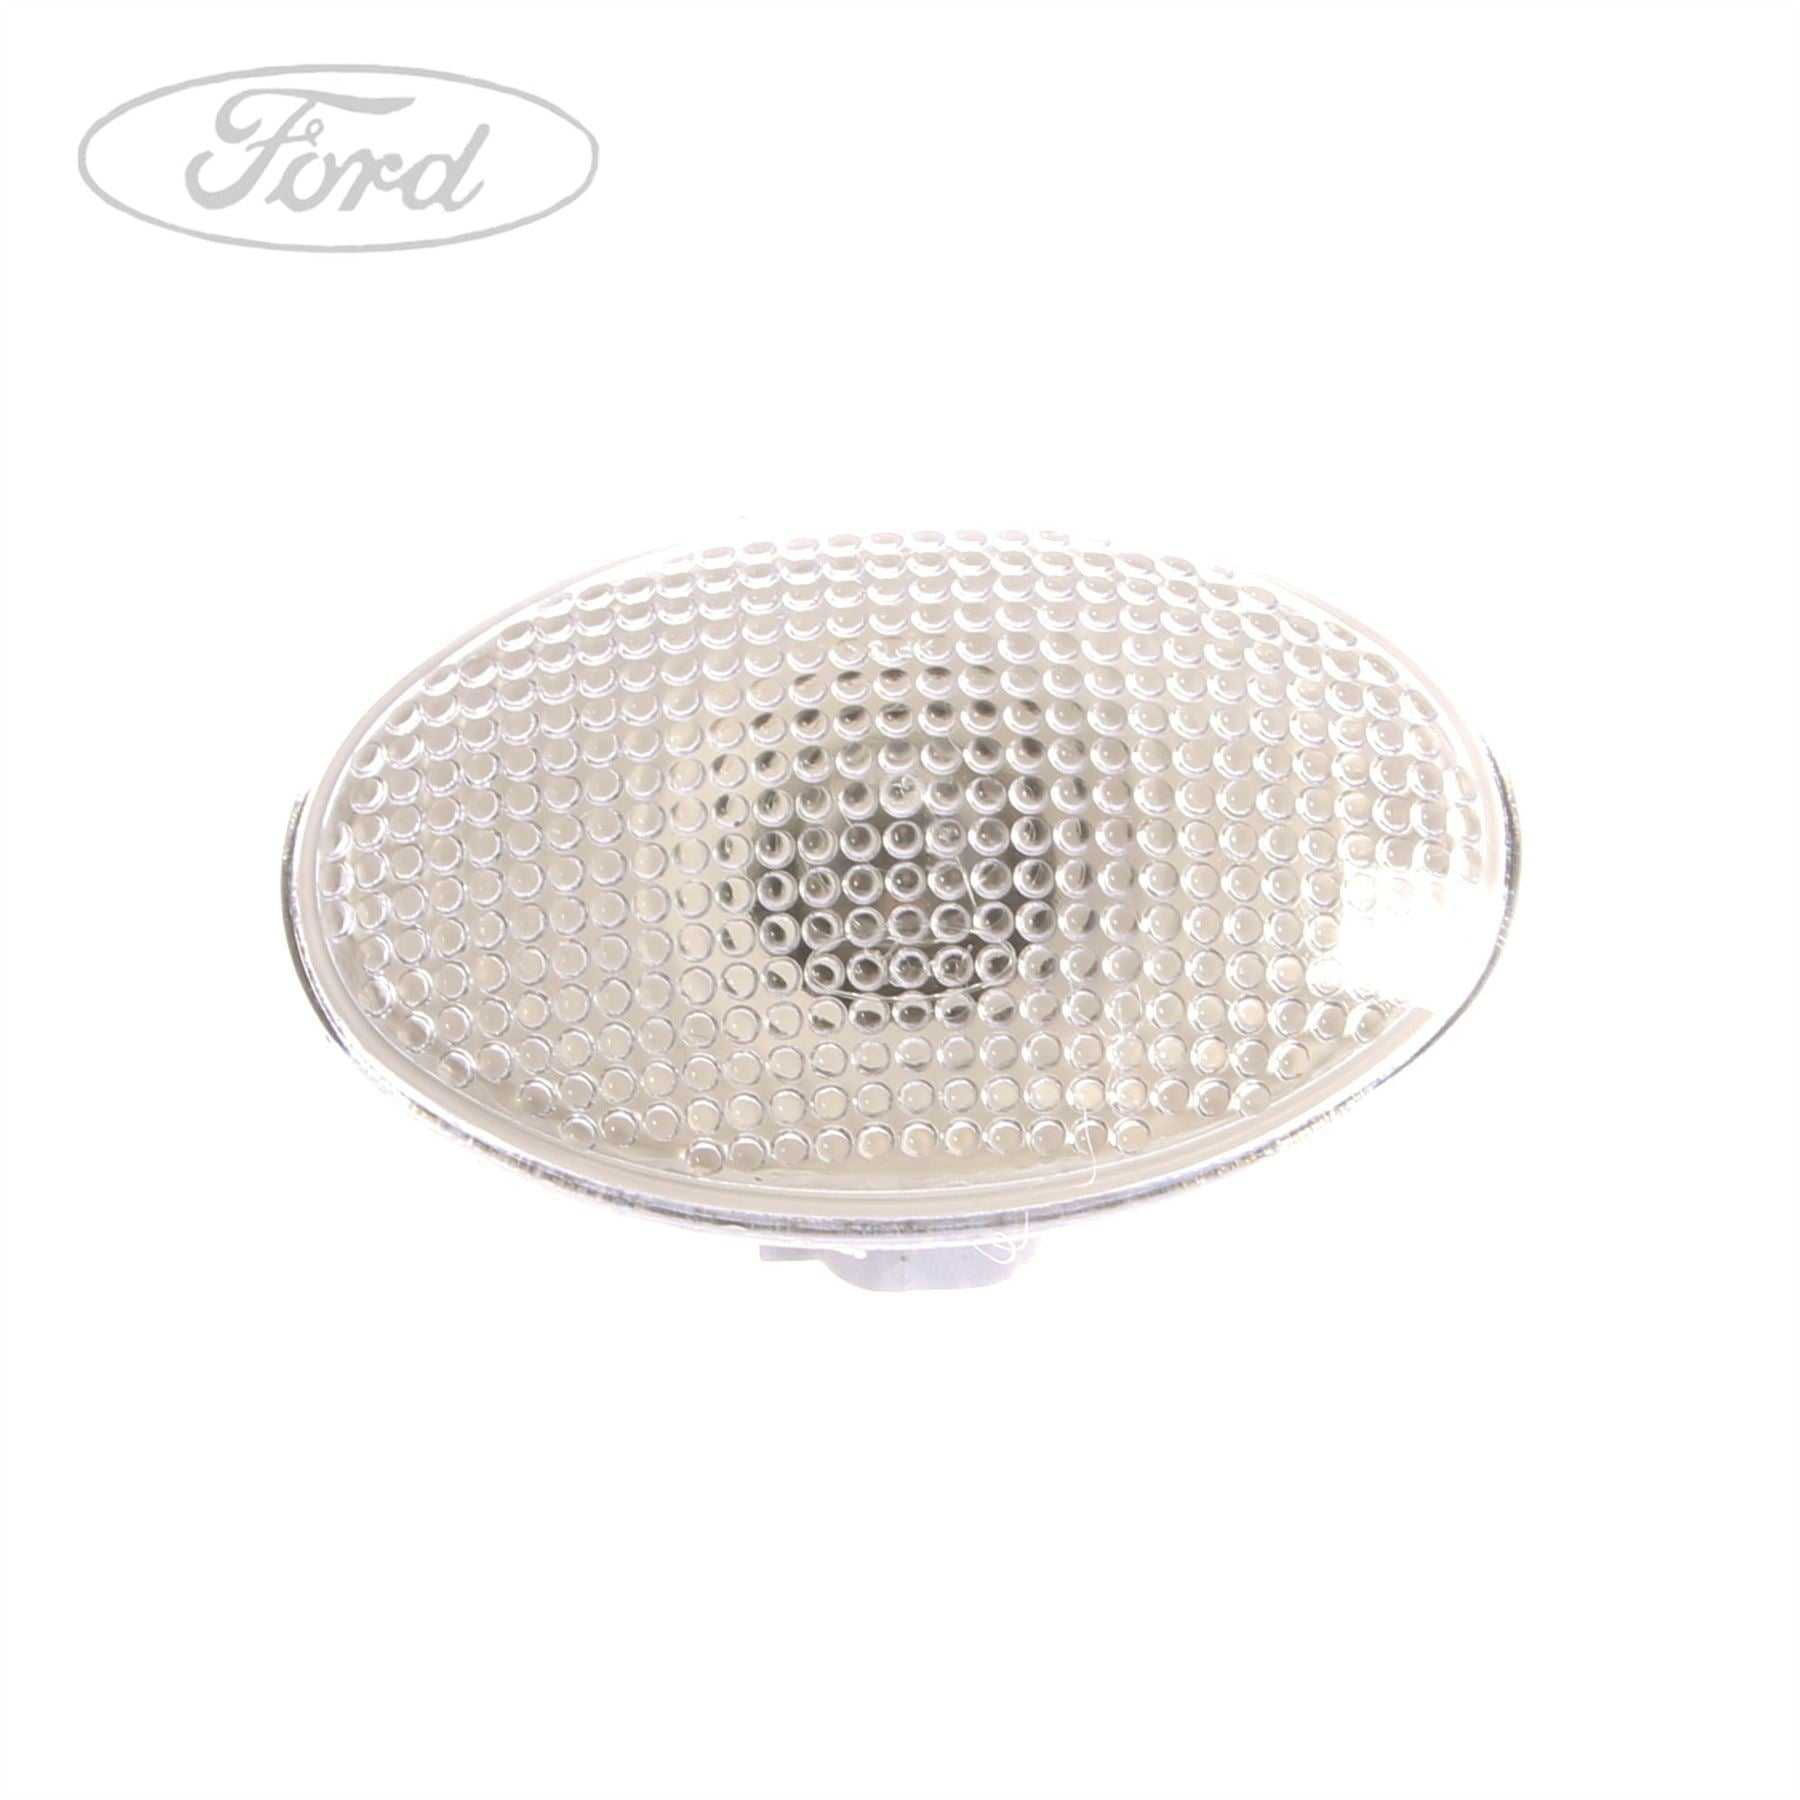 Ford, TRANSIT INTERIOR LIGHT LAMP